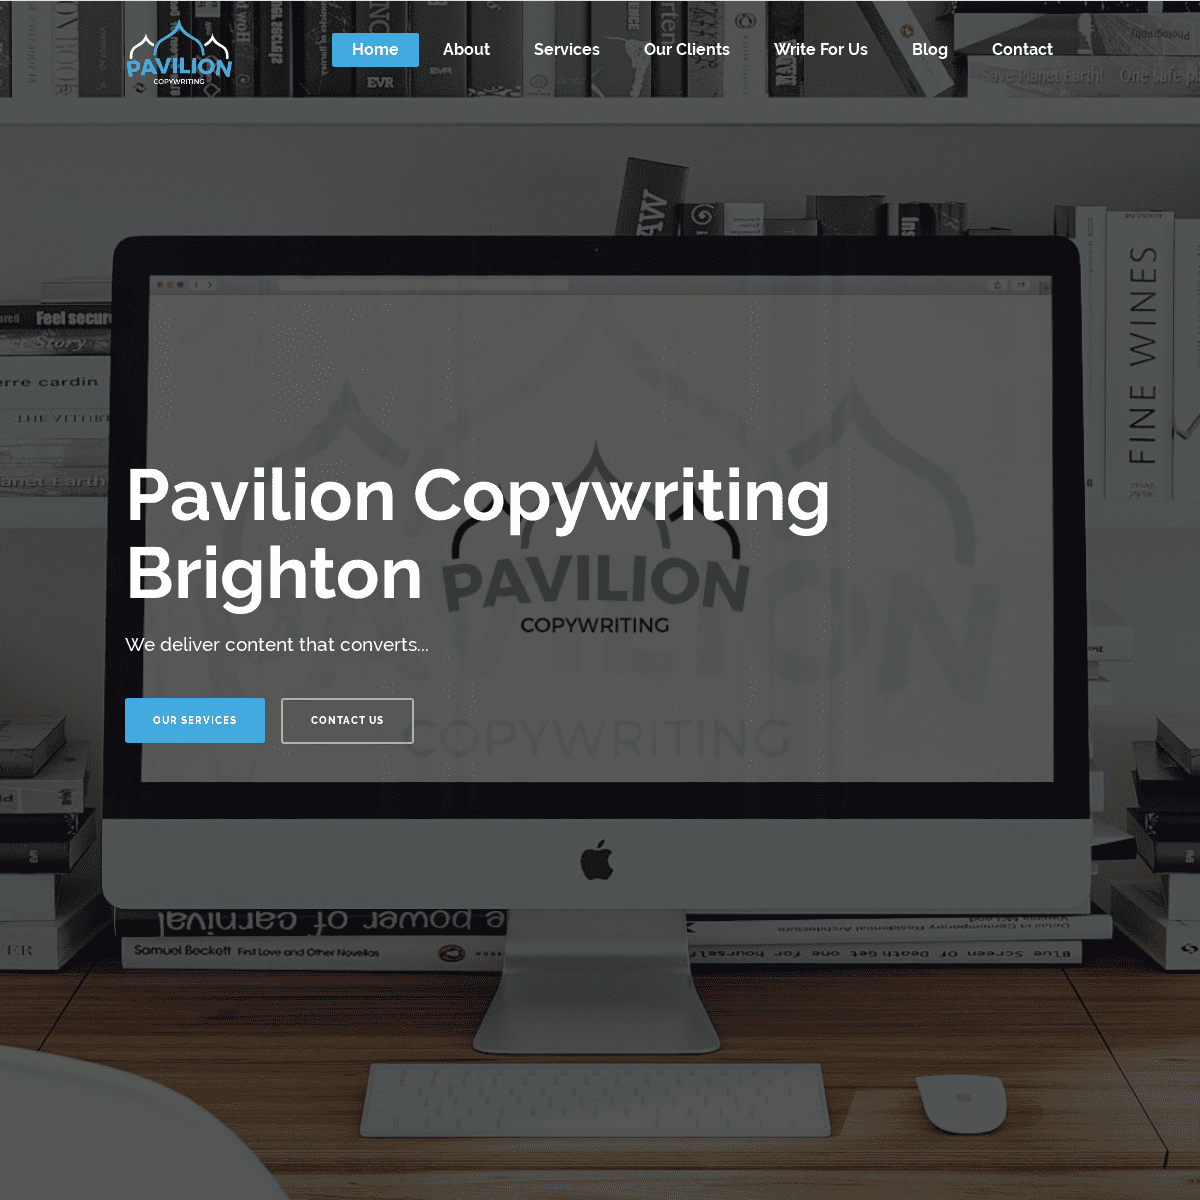 Pavilion Copywriting Services Brighton